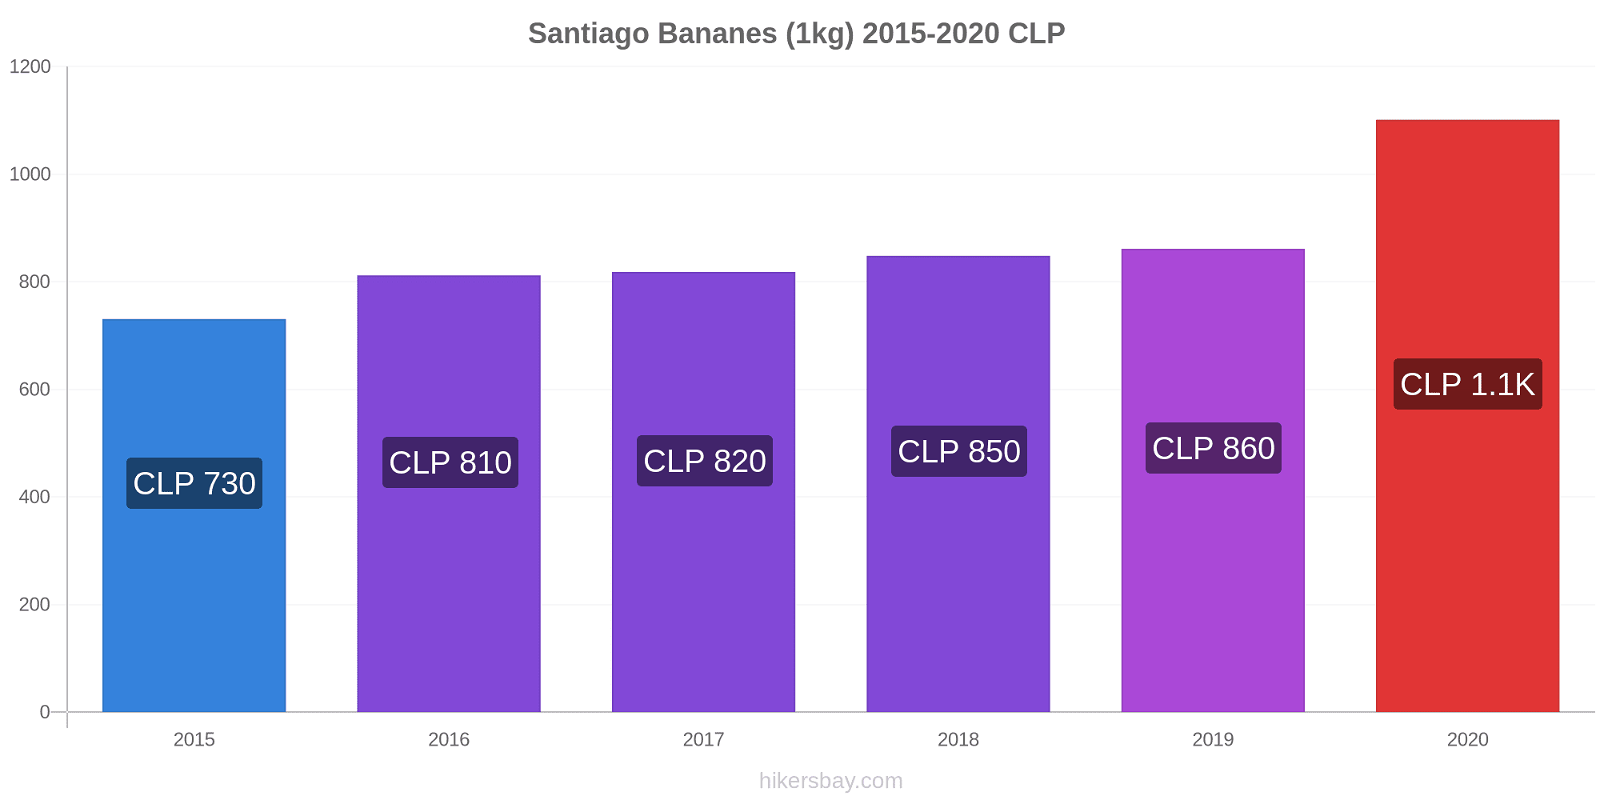 Santiago changements de prix Bananes (1kg) hikersbay.com